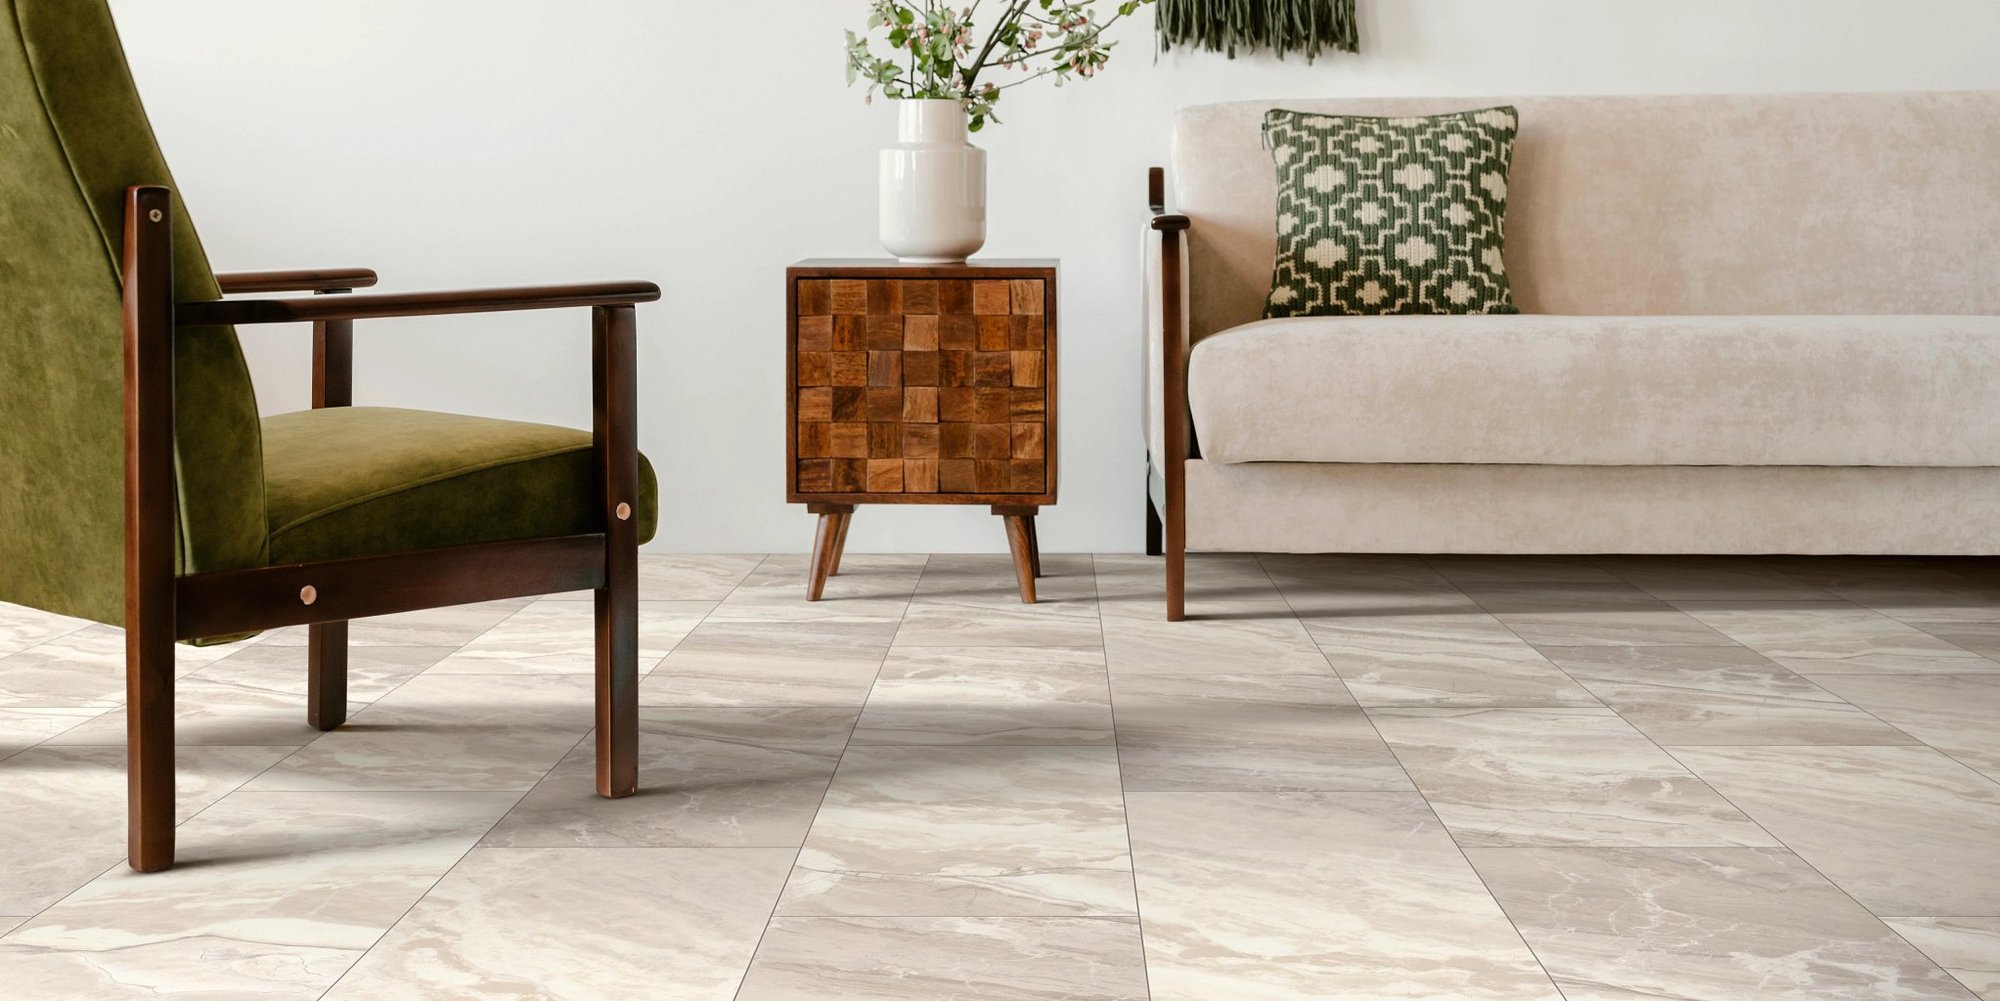 white tile flooring - Whitley Flooring and Design in AR